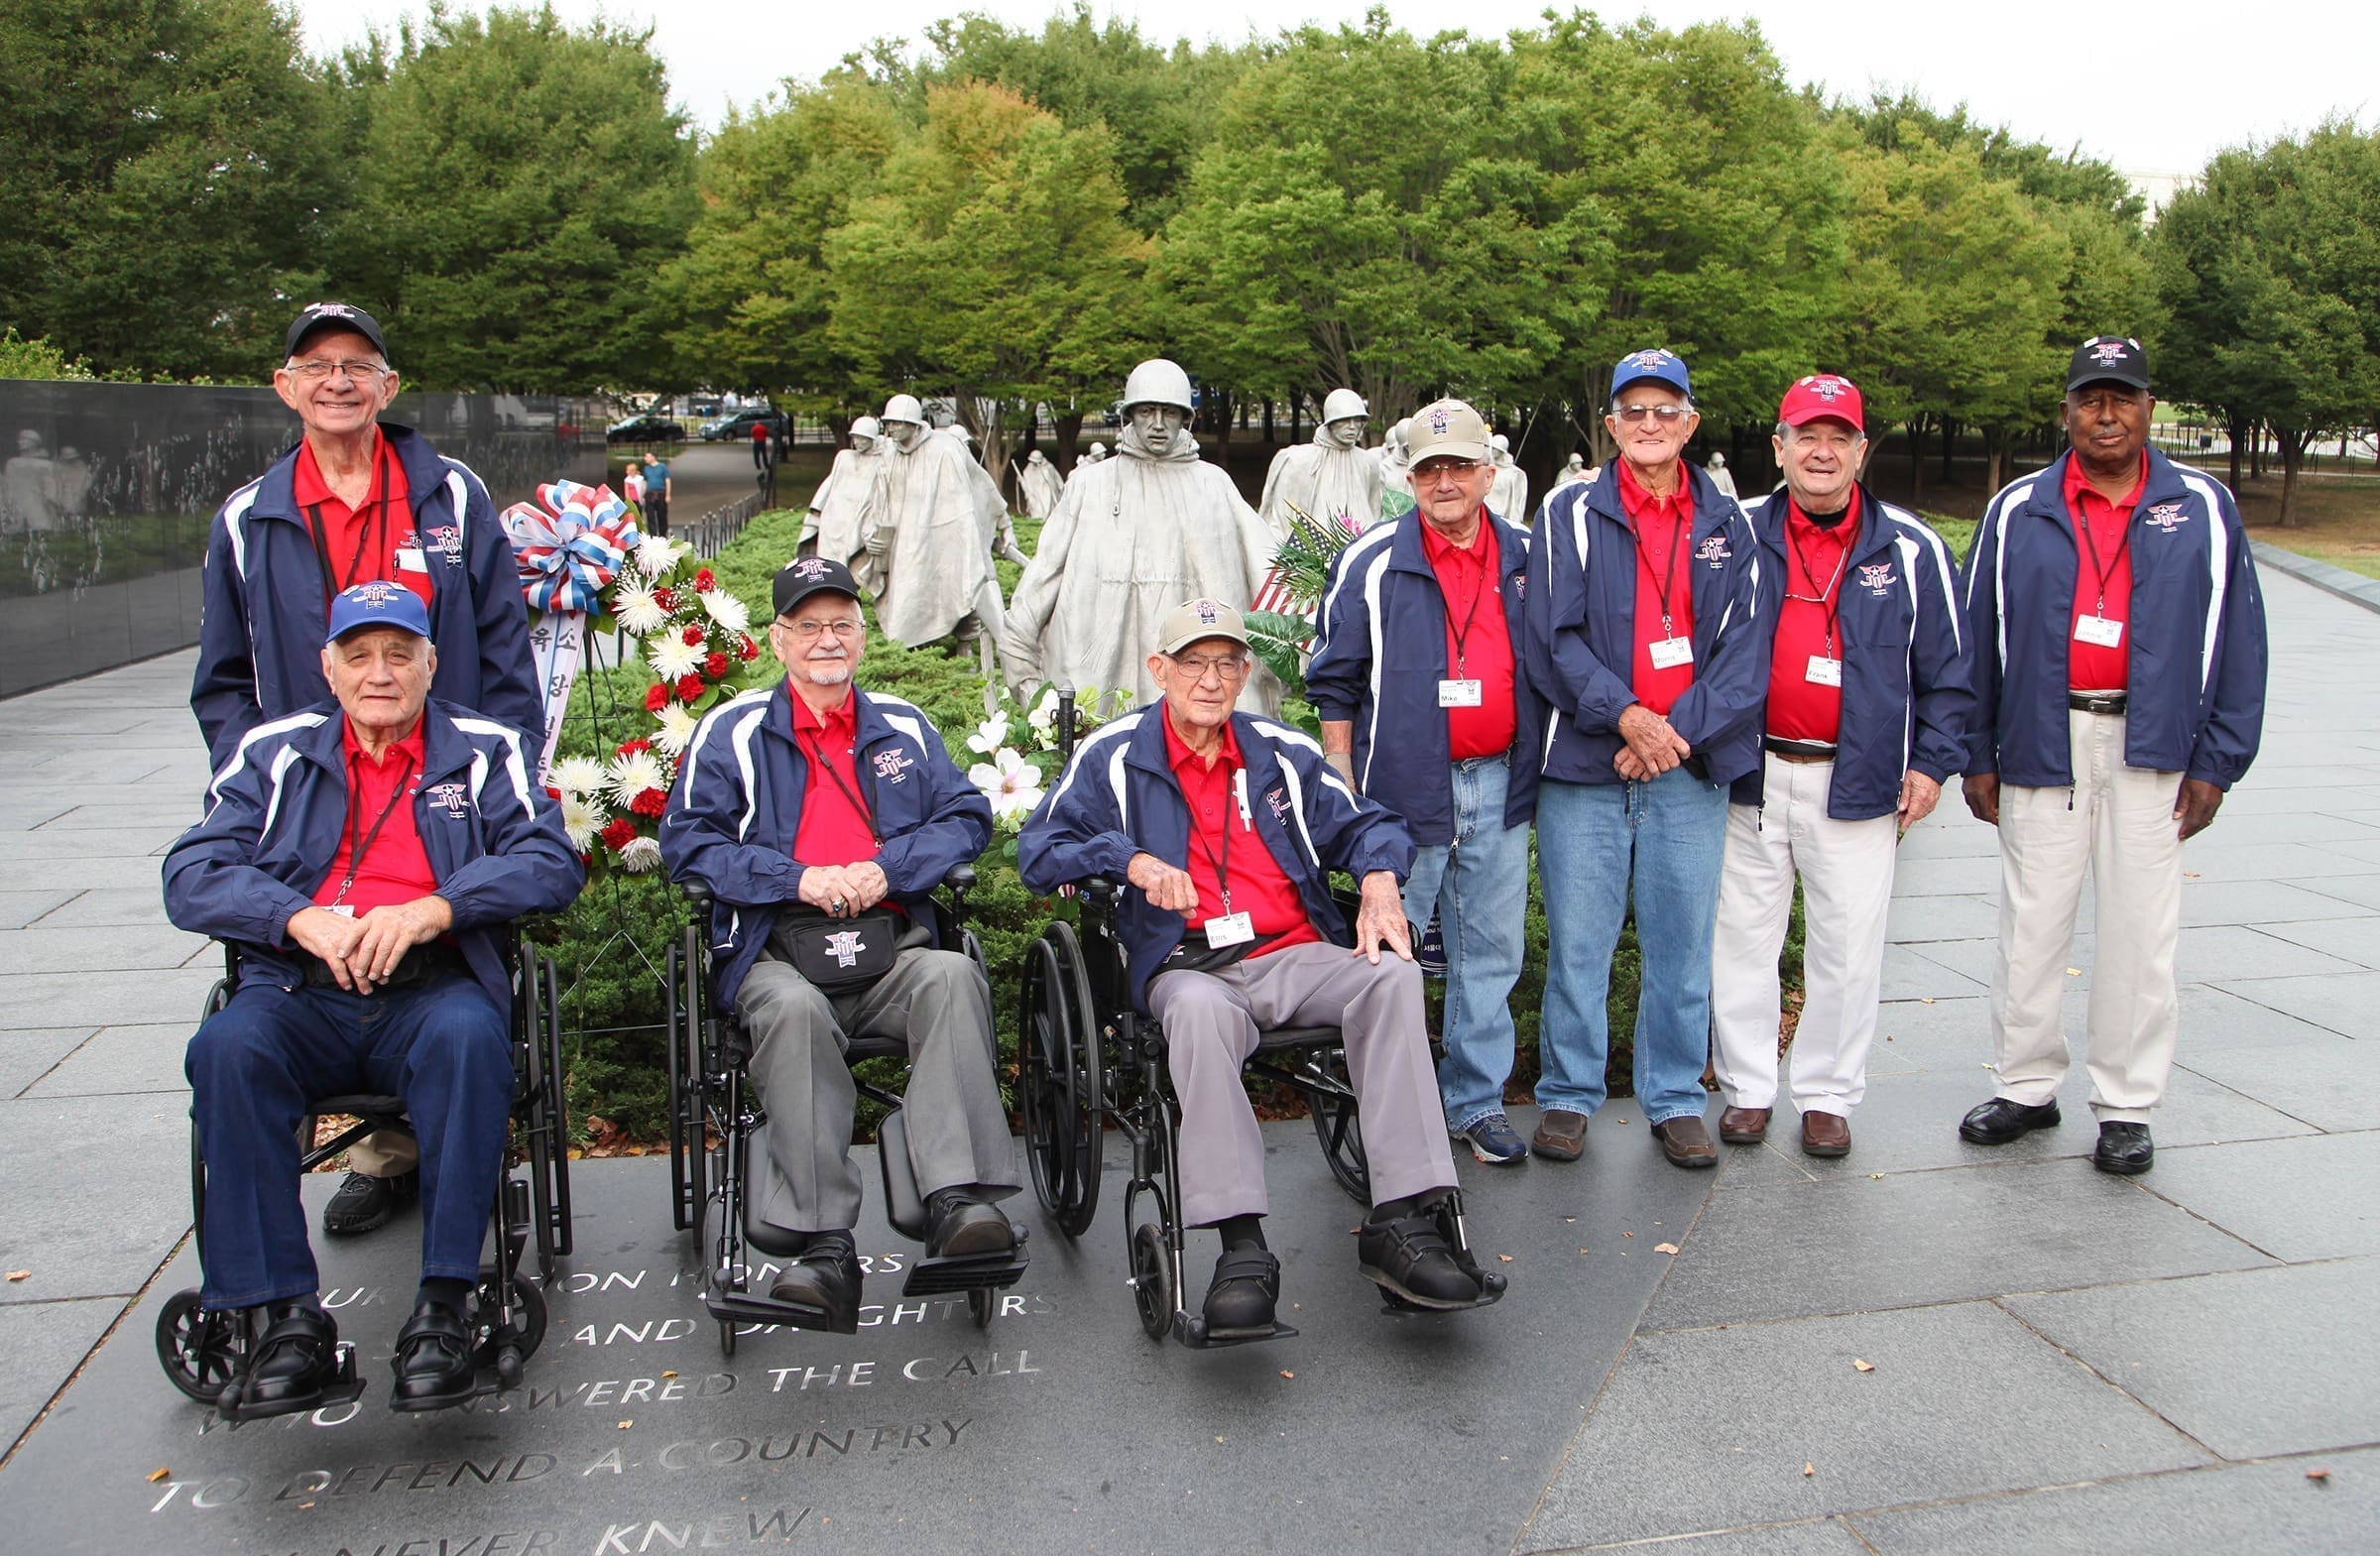 Veterans from World War II and the Korean War visiting Washington, D.C.